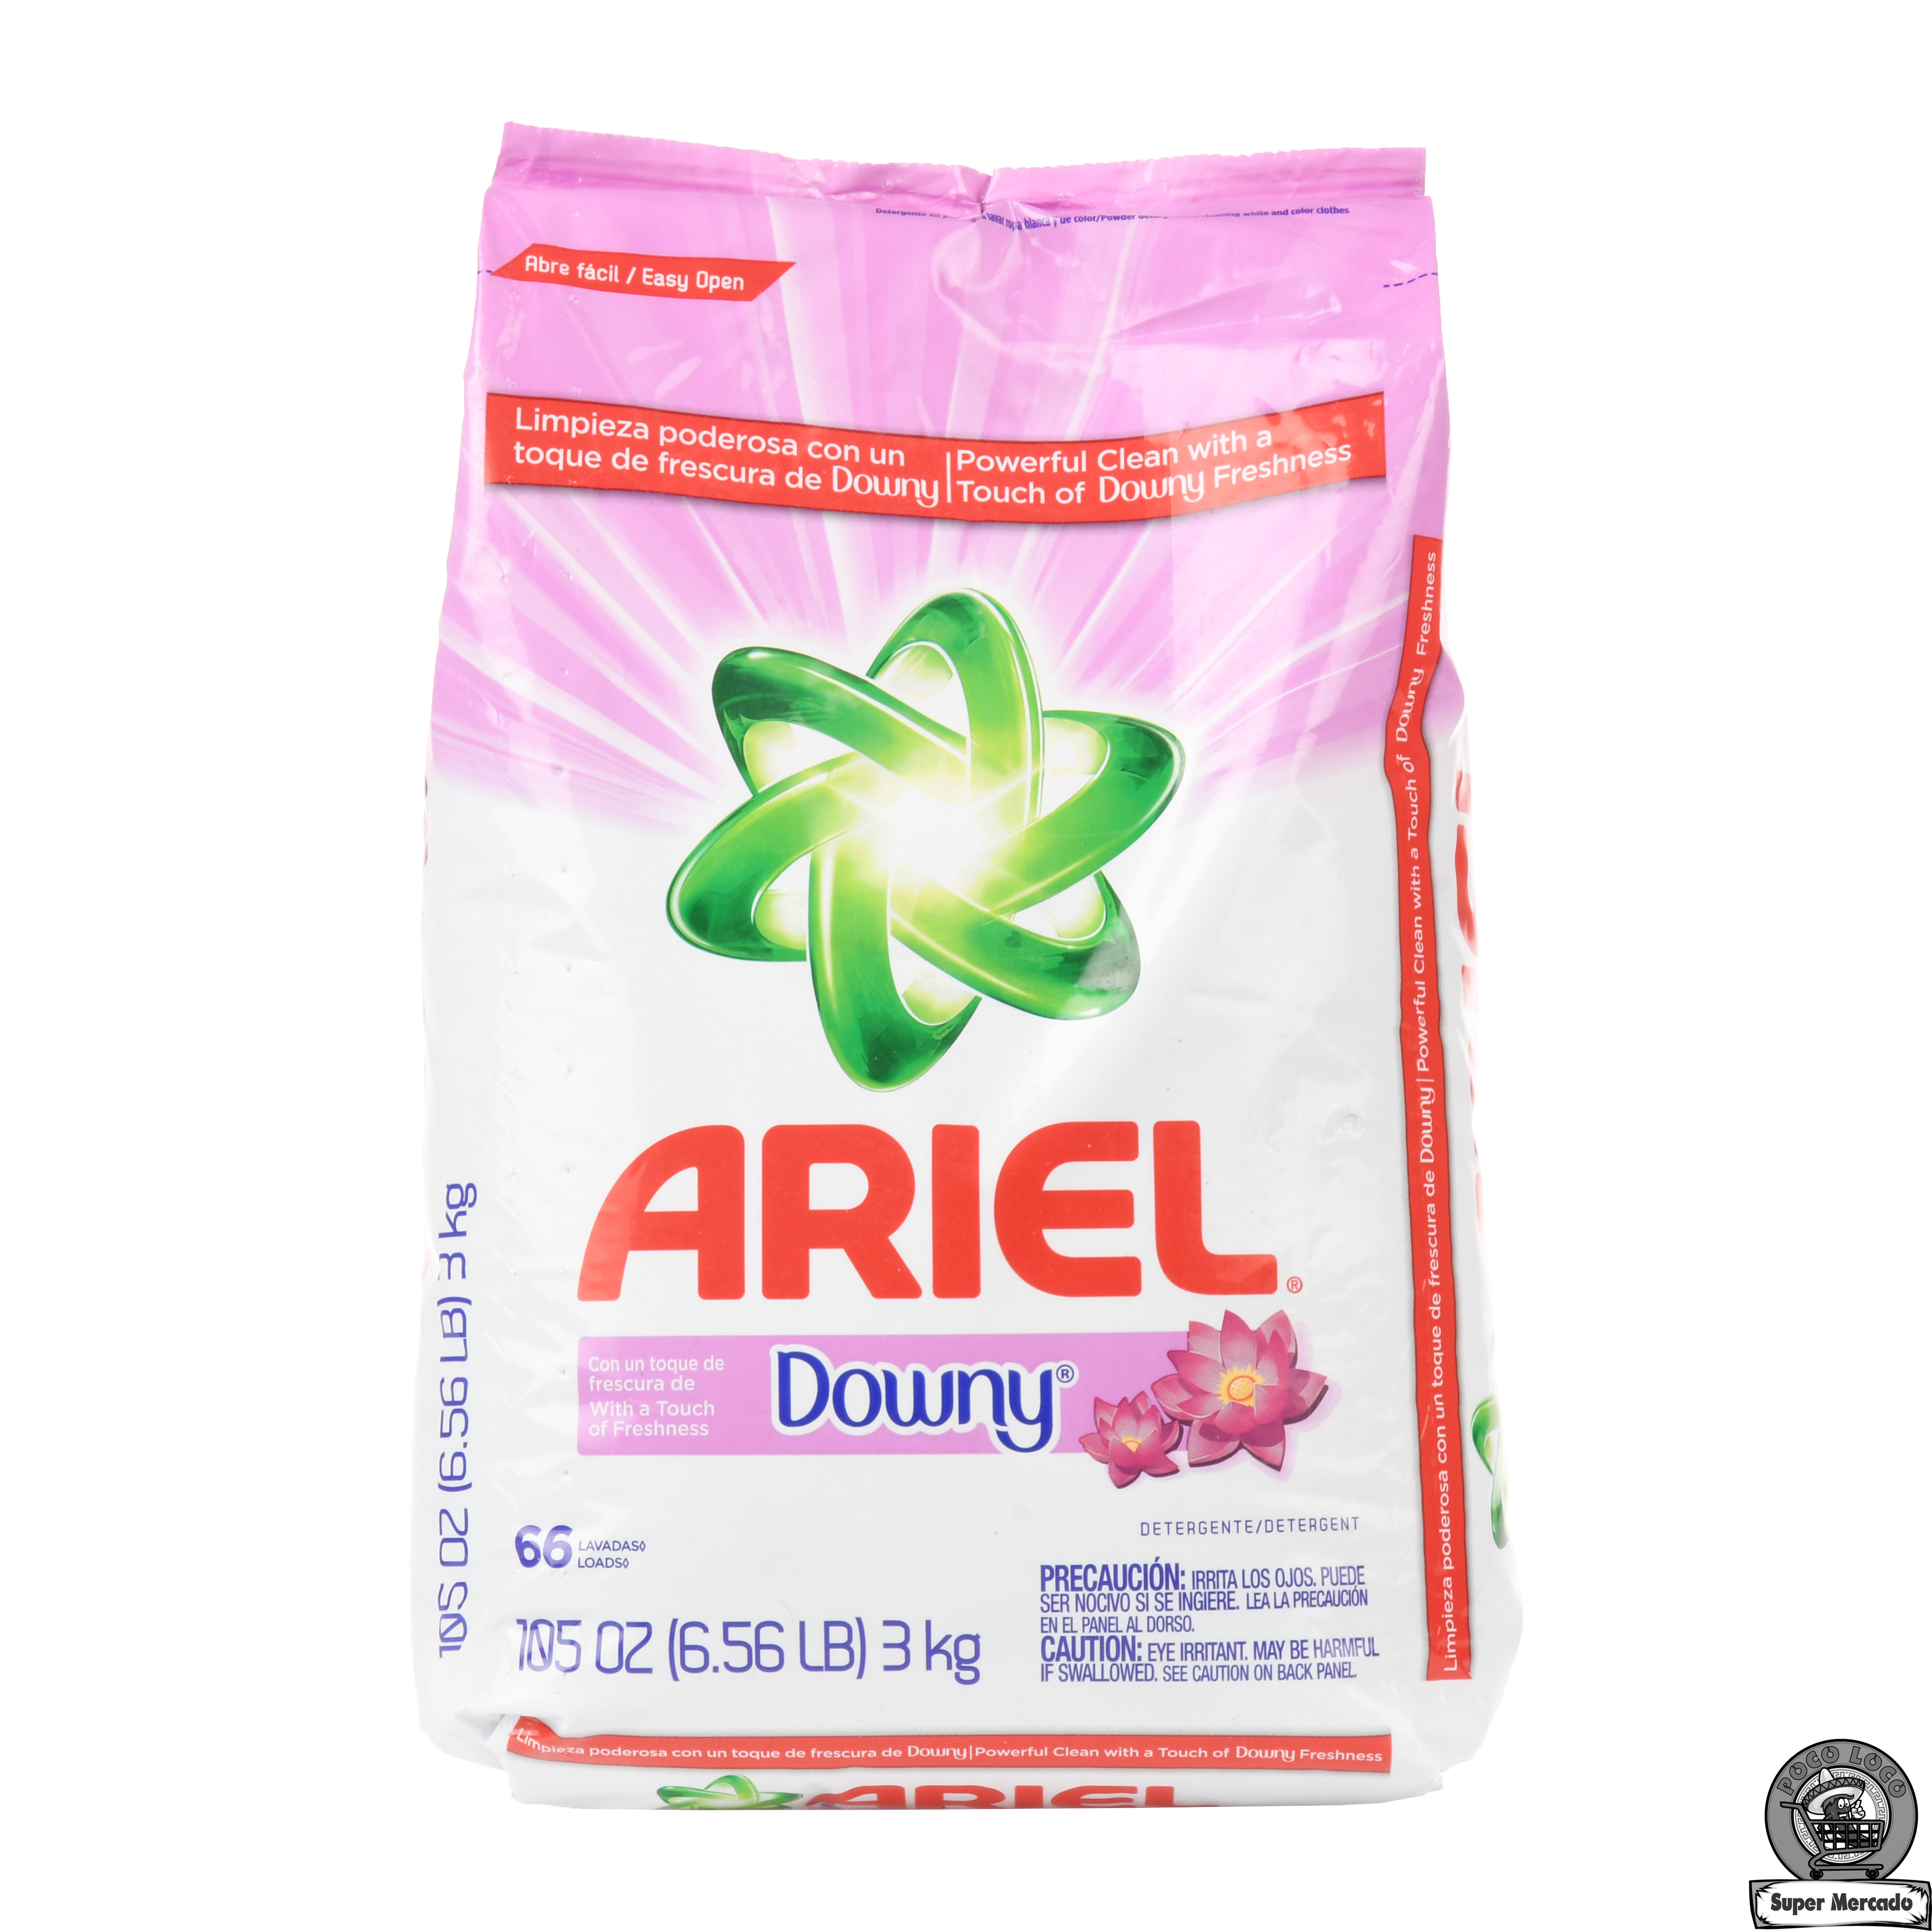 Ariel Powdered Detergent with Downy